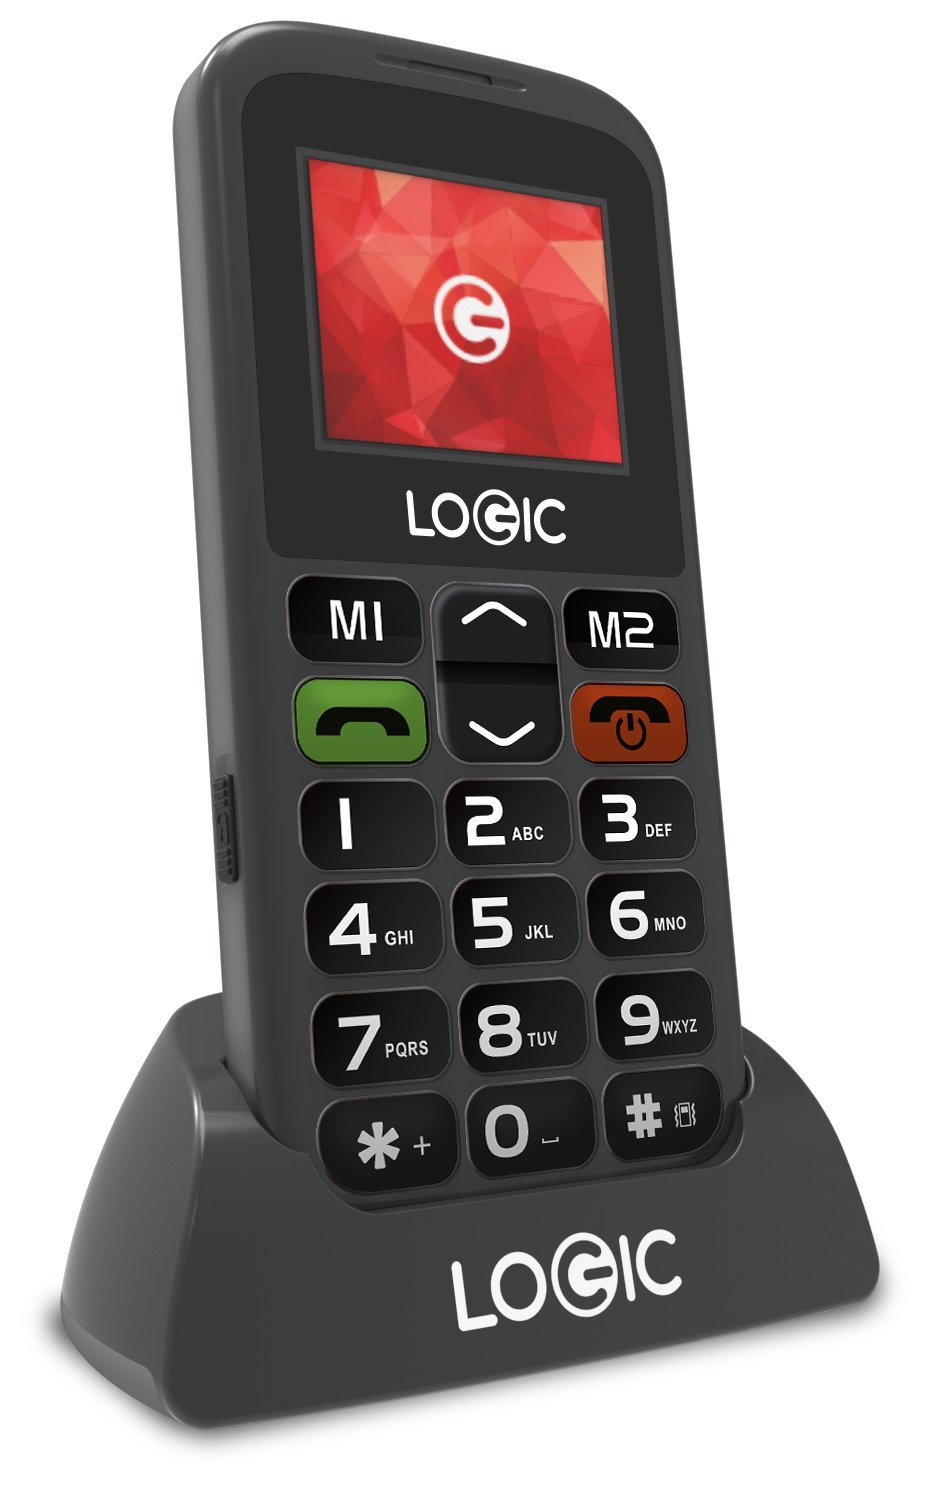 image of Logic smartphone